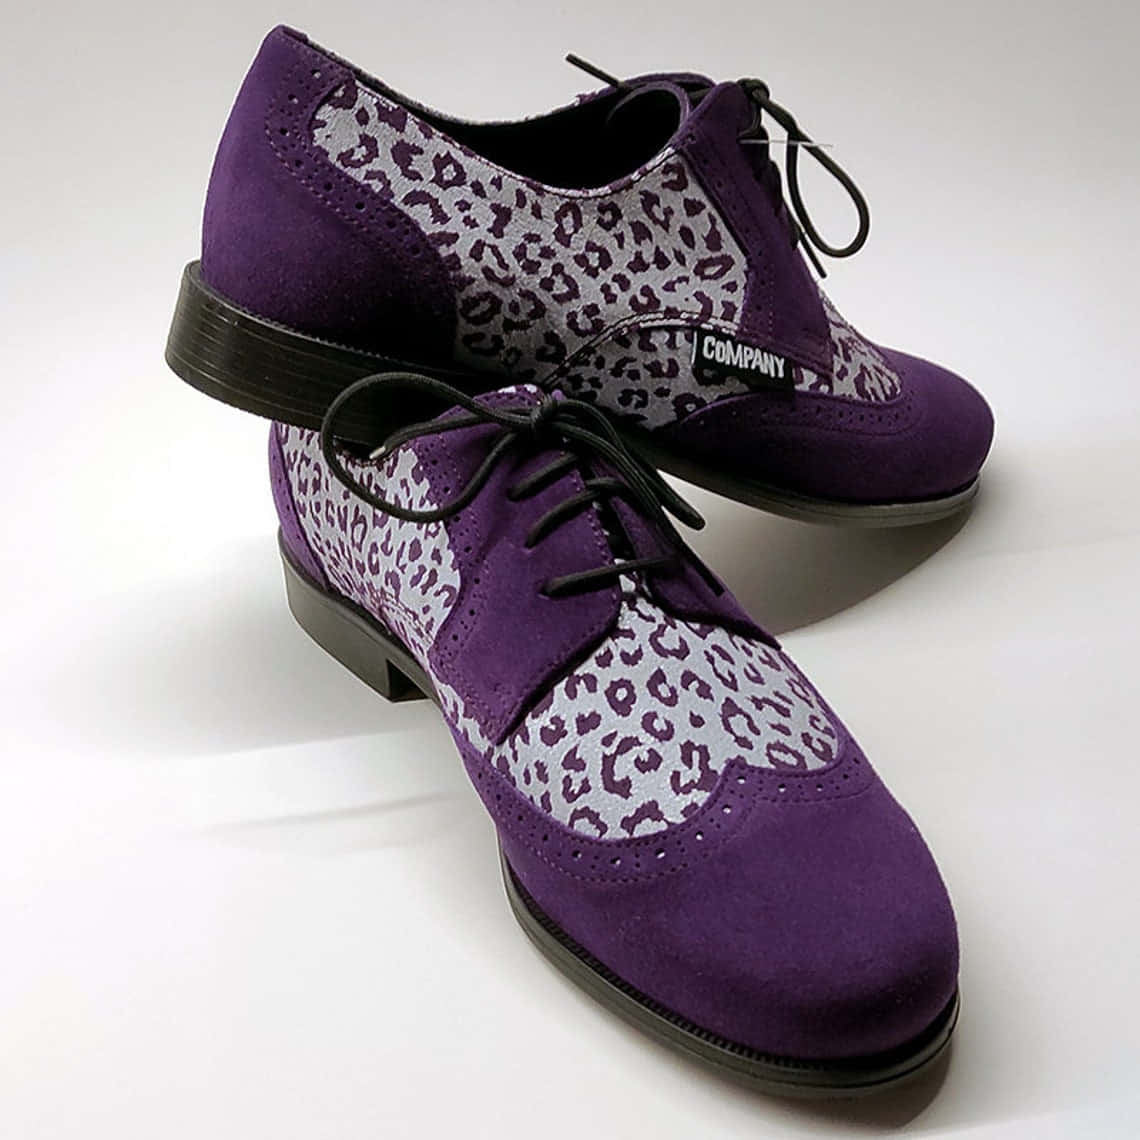 Download Purple Shoes 1140 X 1140 Wallpaper Wallpaper | Wallpapers.com